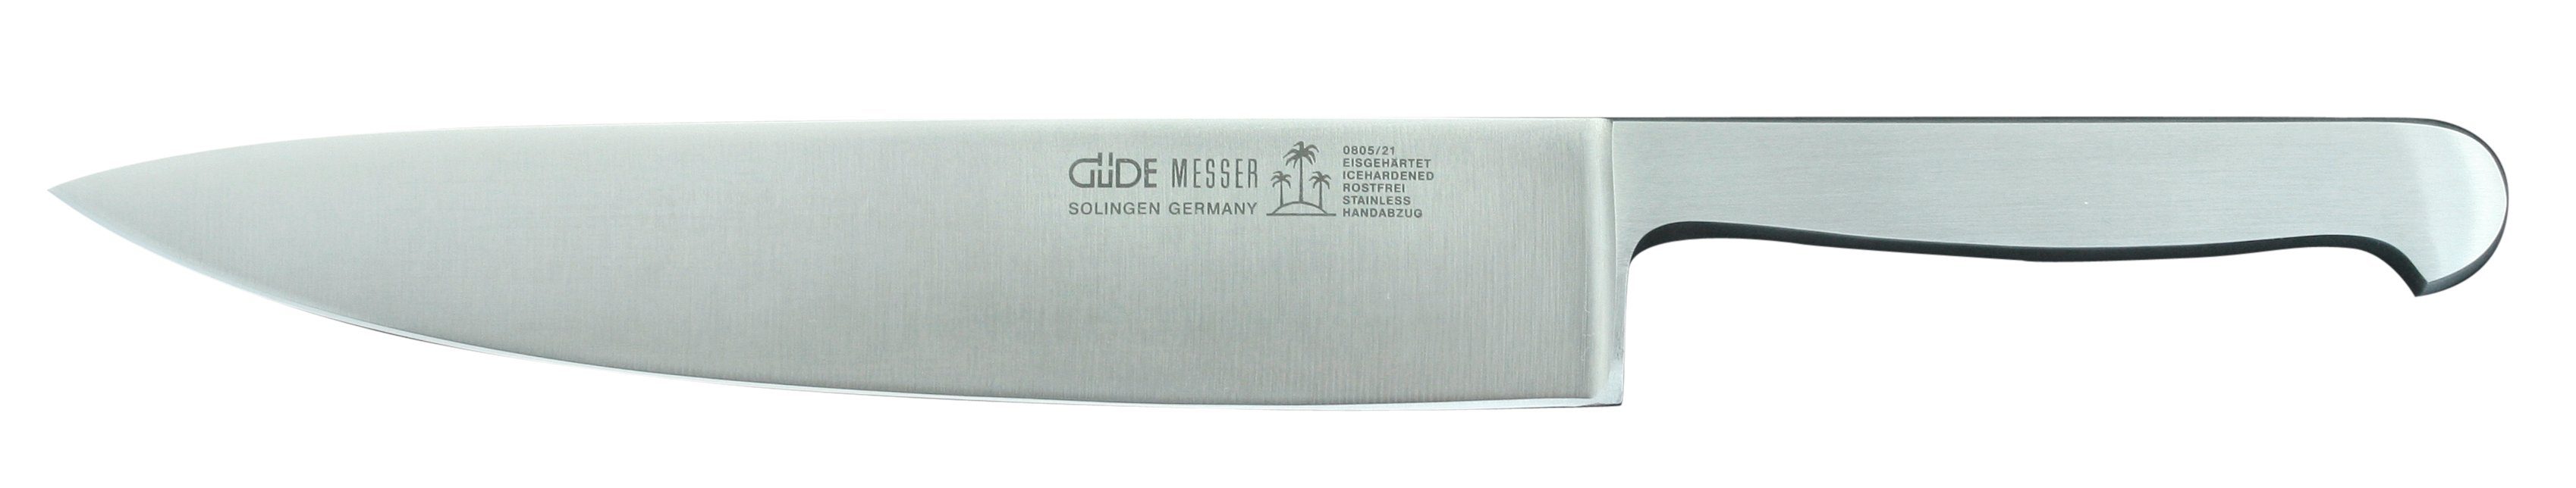 Güde Messer Solingen Kochmesser Kappa, Kochmesser 21 cm - Klinge und Griff CVM-Stahl